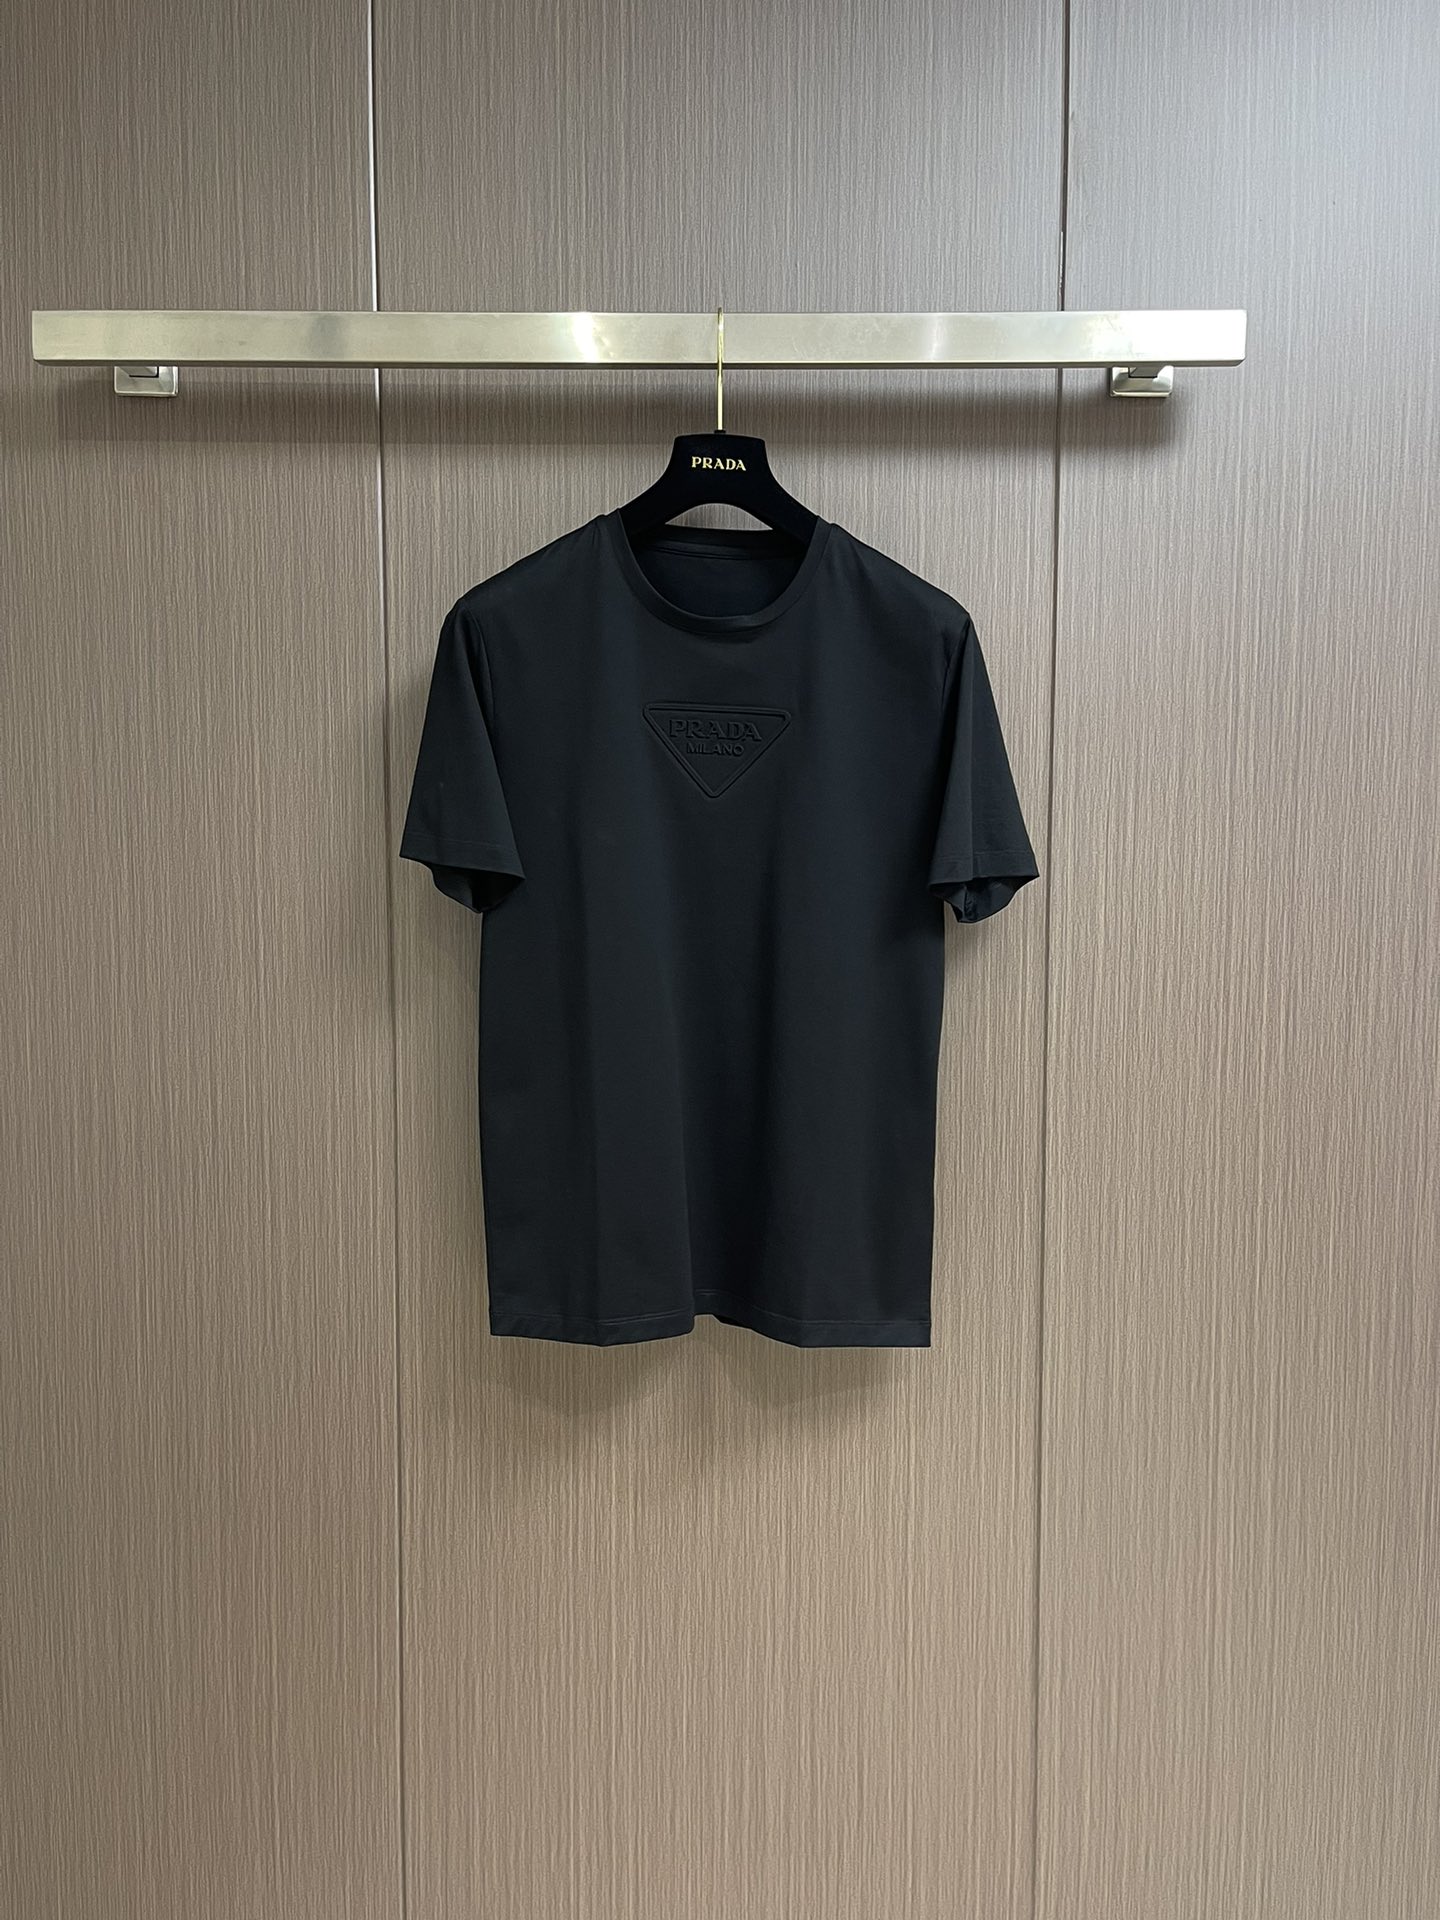 Prada Clothing T-Shirt Cotton Mercerized Nylon Spring Collection Fashion Short Sleeve